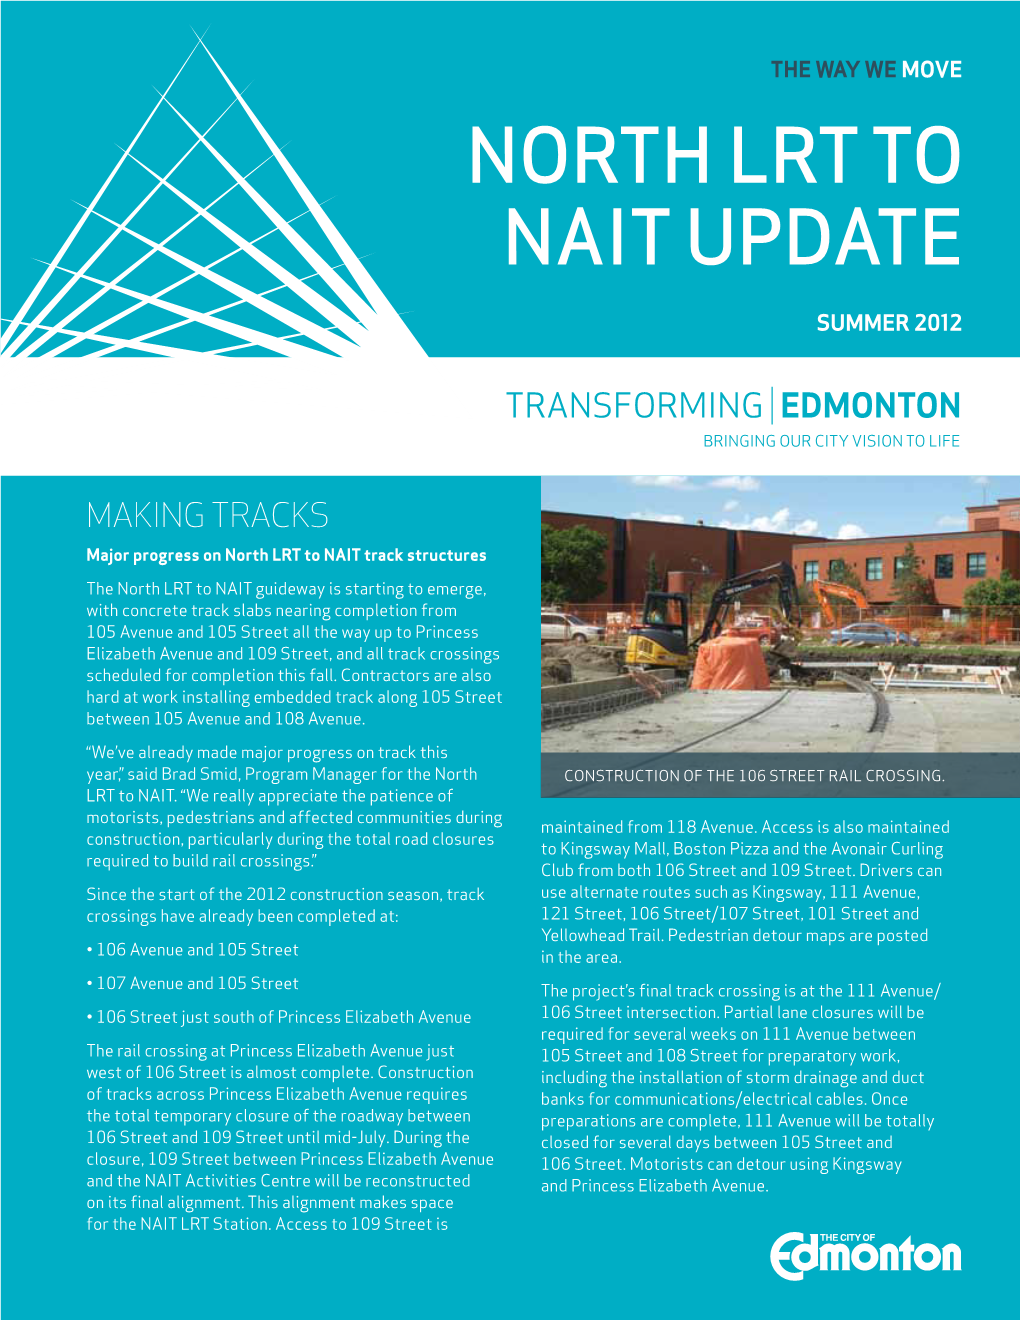 North LRT to NAIT Update